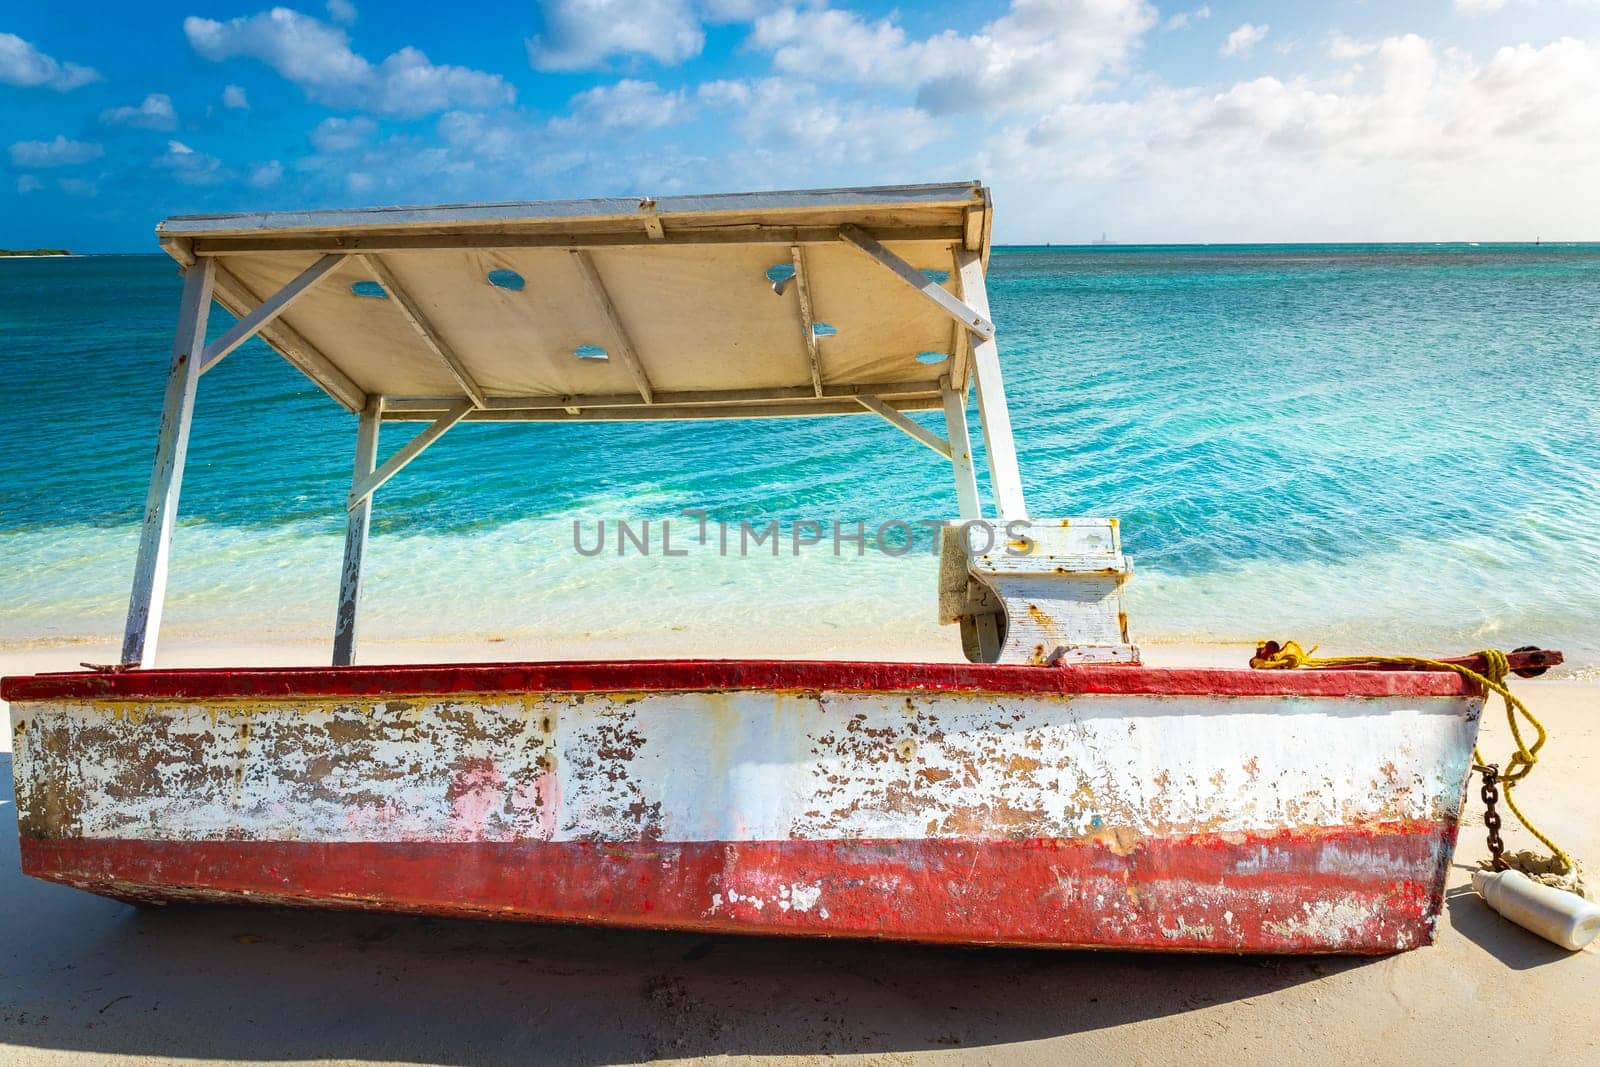 Trawler fishing boat on secluded beach in Aruba island, Caribbean sea by positivetravelart